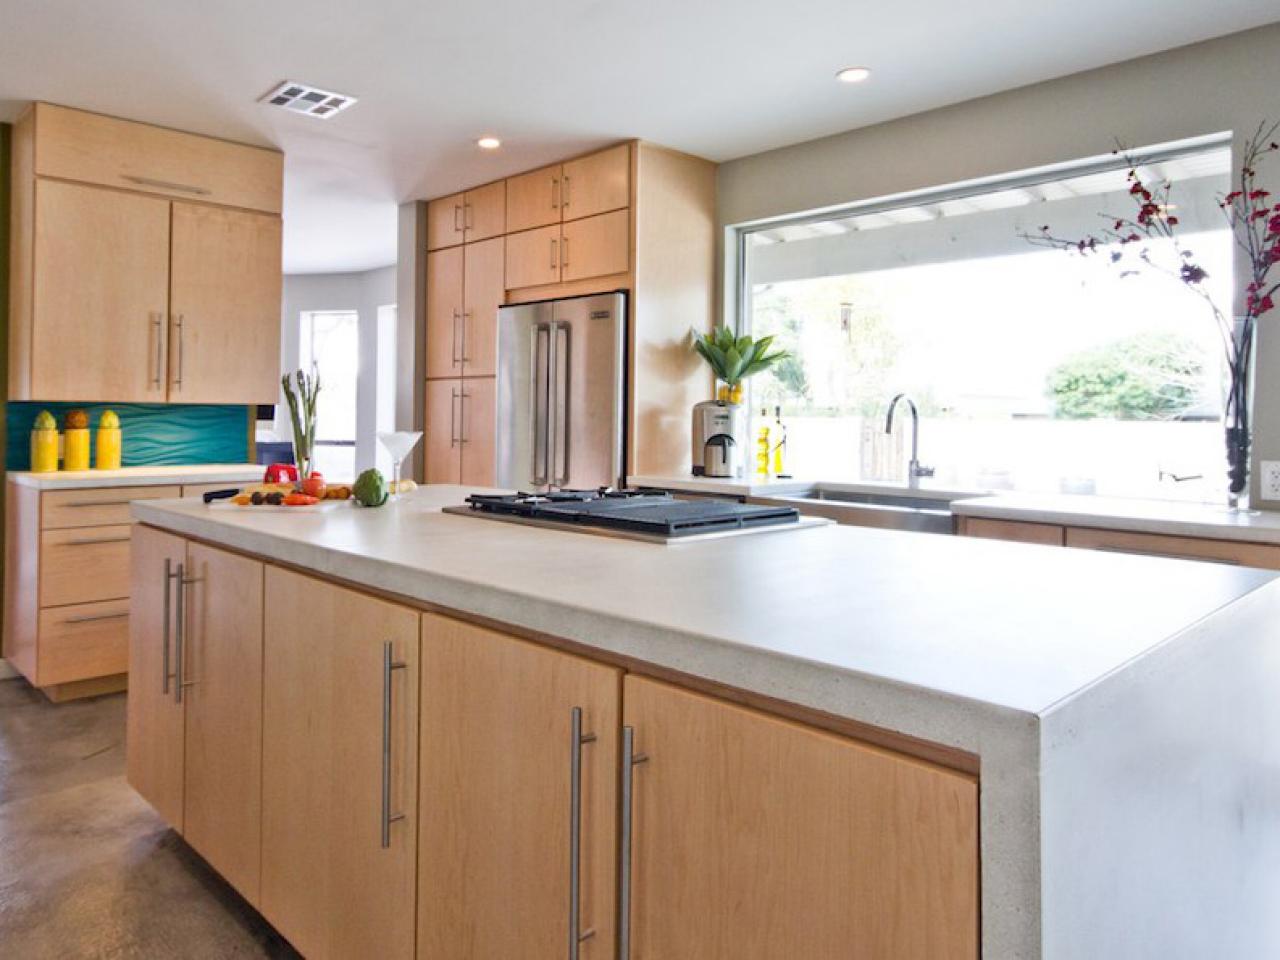 kitchen design with concrete countertops